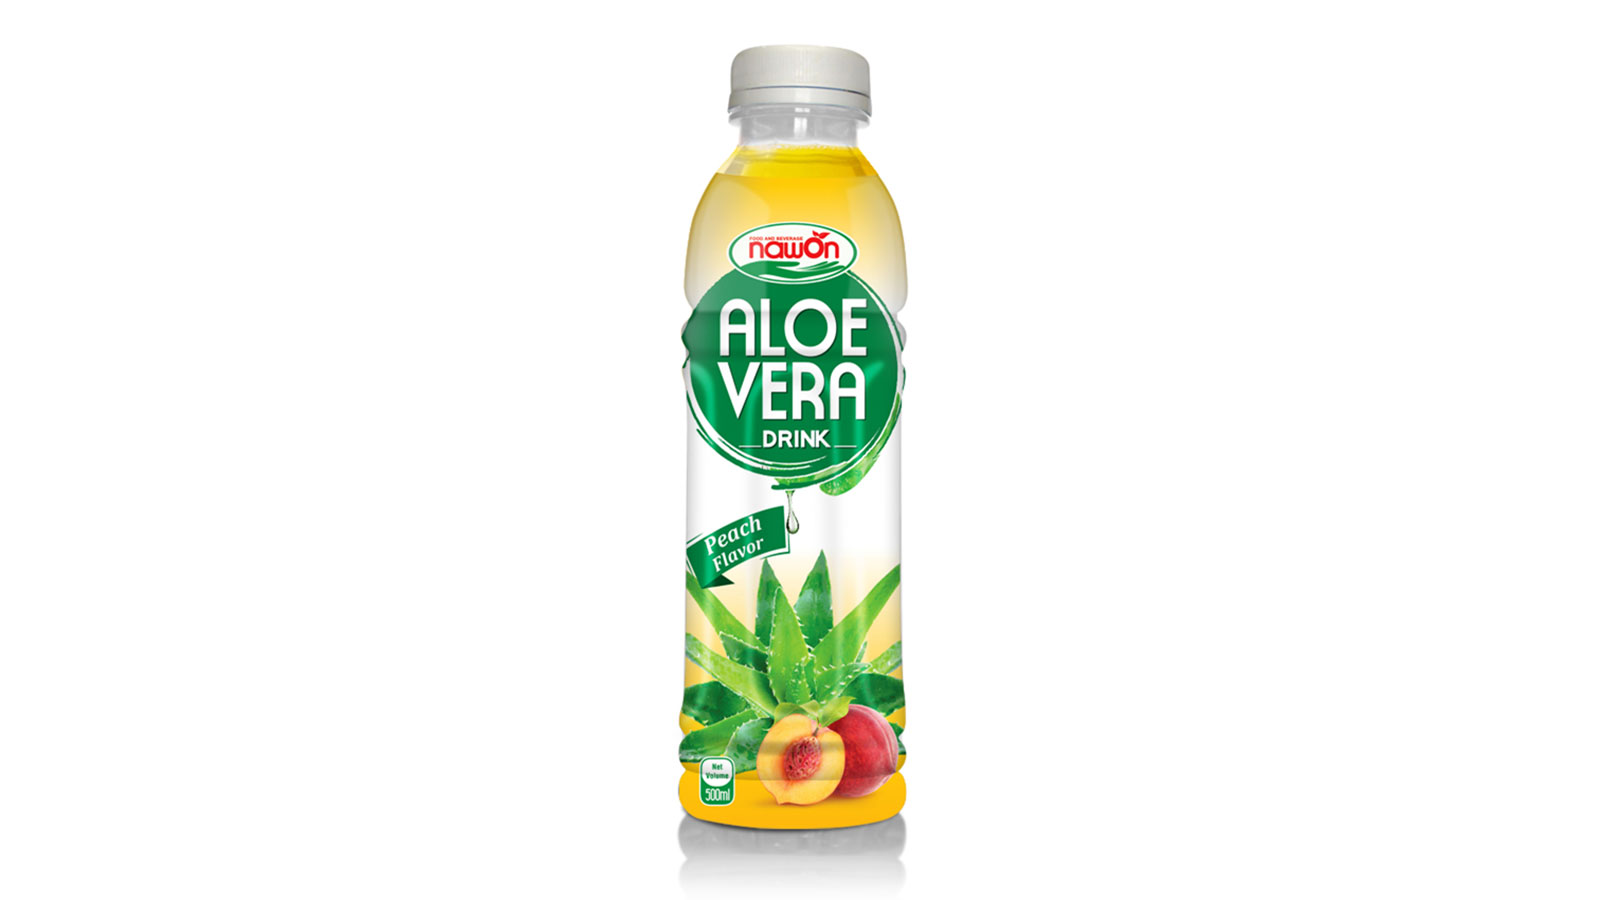 Aloe vera drink with pineapple flavor